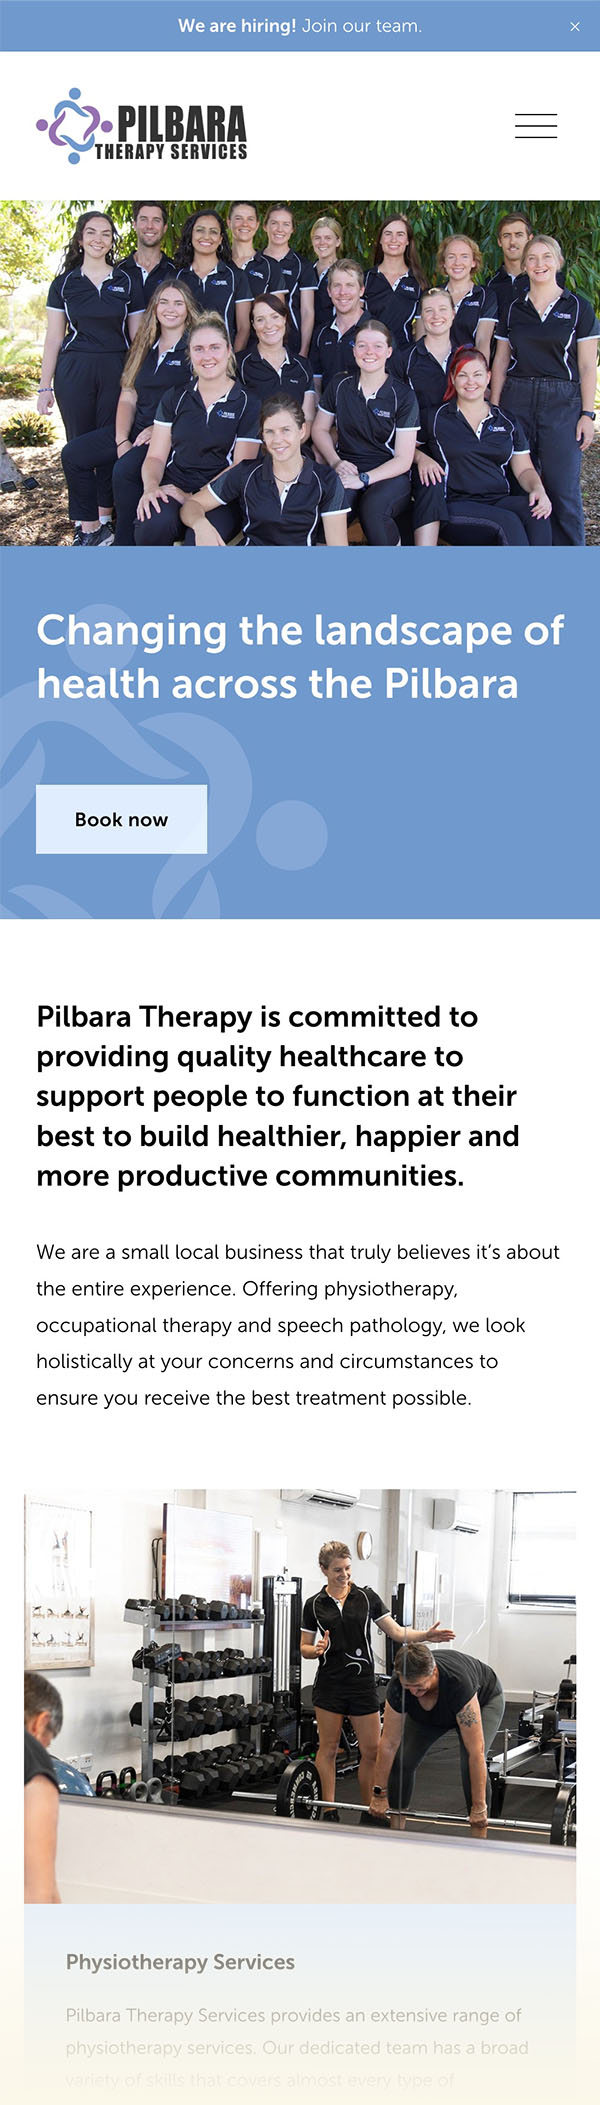 Pilbara Therapy Services Website Design by Emma Hackett Design